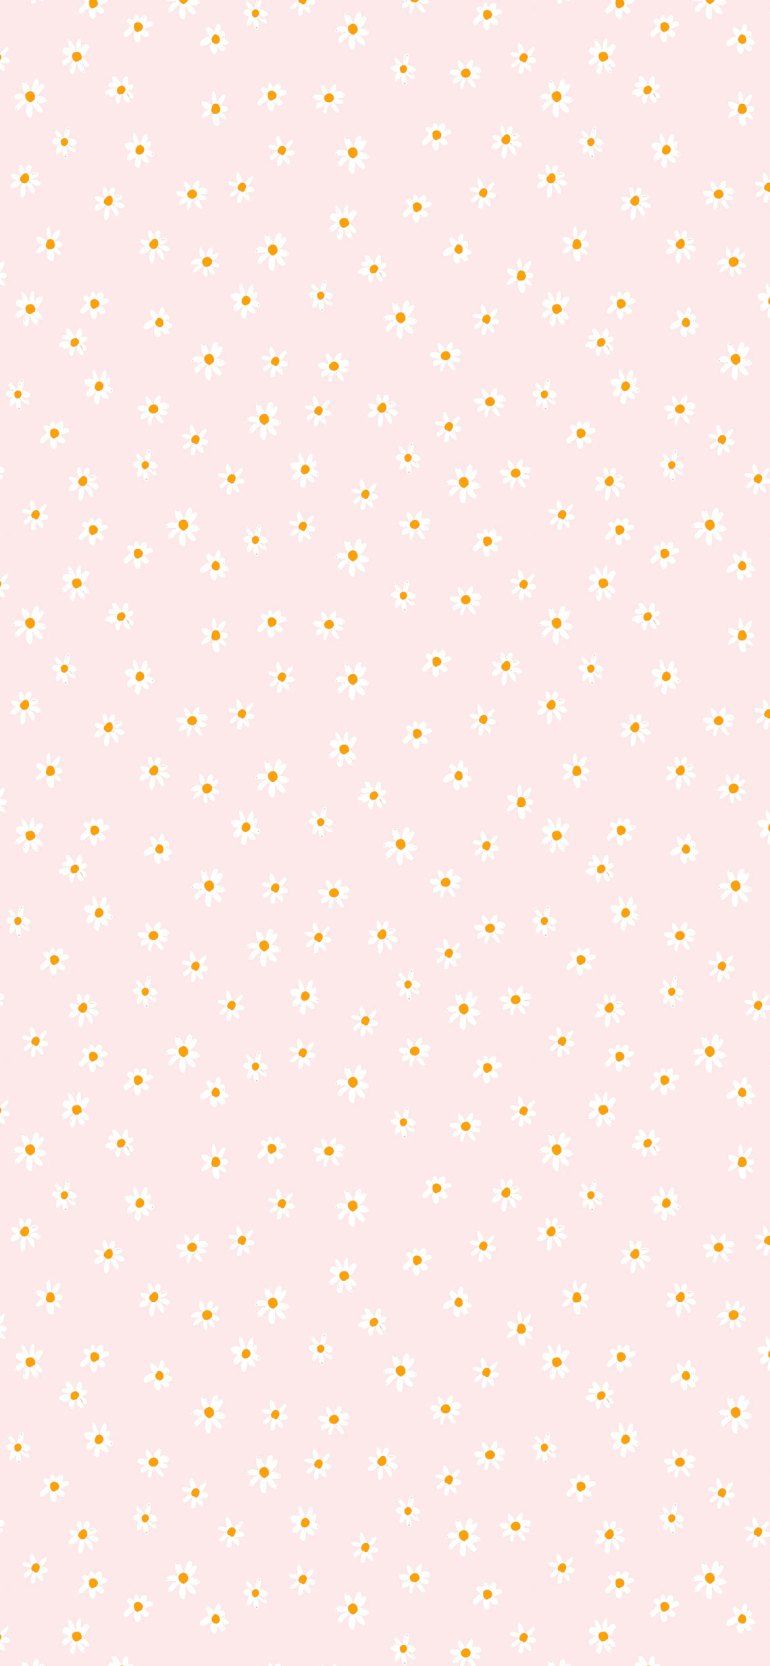  Rosa Hintergrundbild 770x1666. Pink Aesthetic Picture : Daisy Wallpaper for Phone Wallpaper